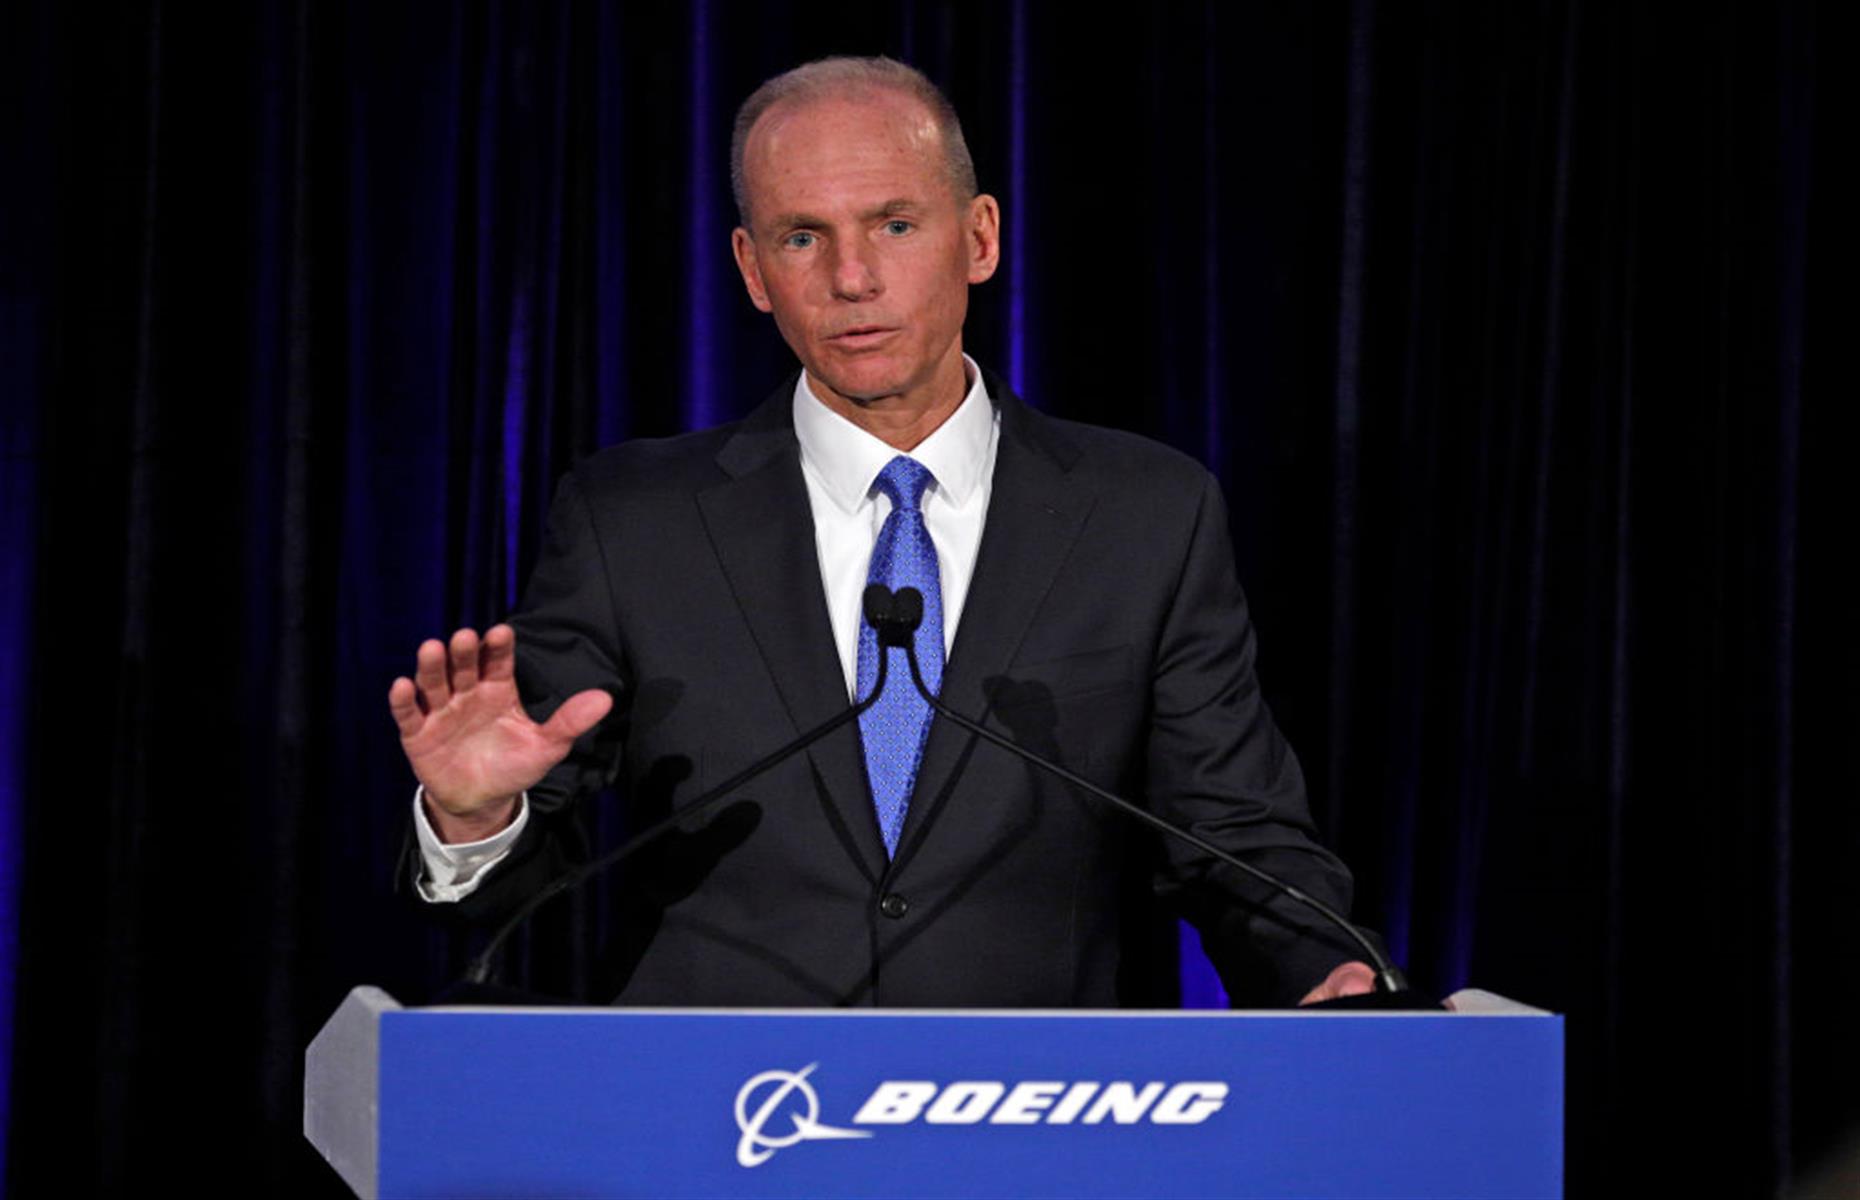 Dennis Muilenburg, Boeing